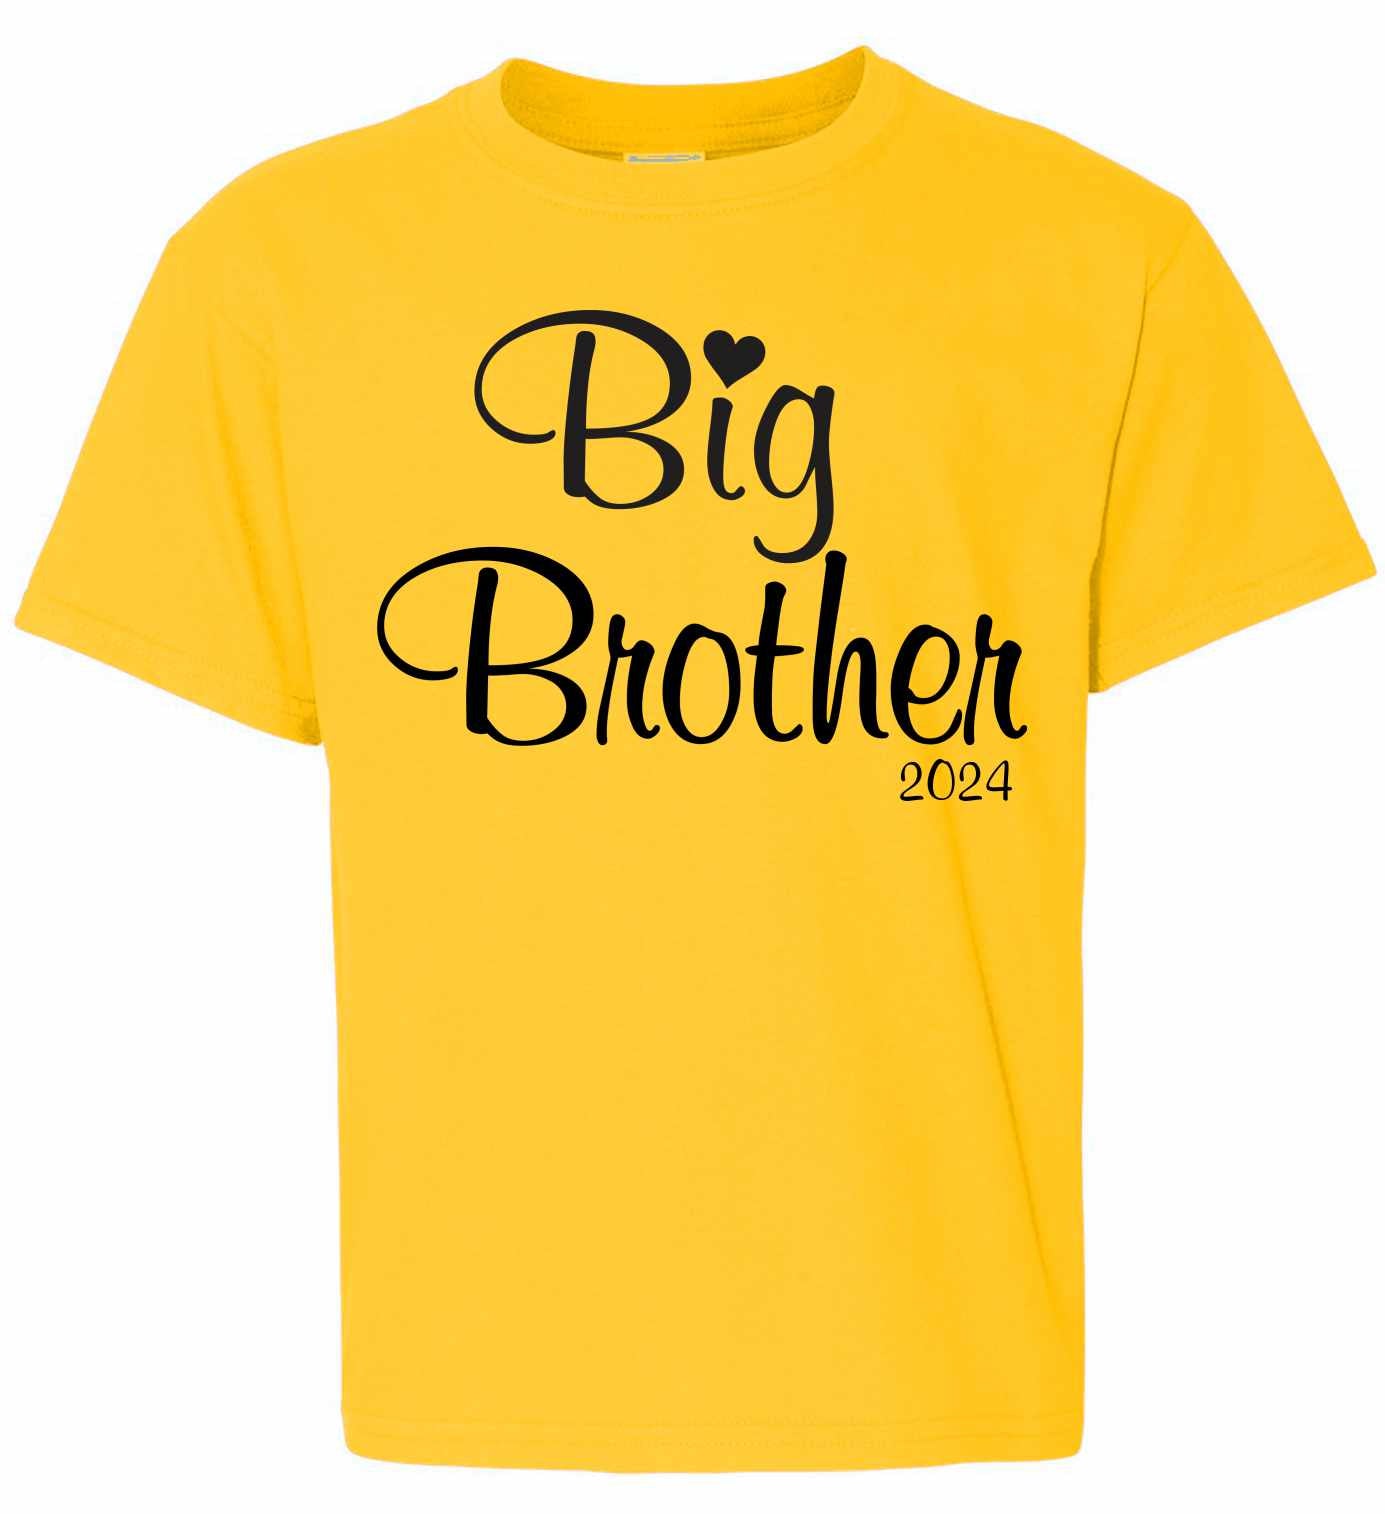 Big Brother 2024 on Kids T-Shirt (#1365-201)